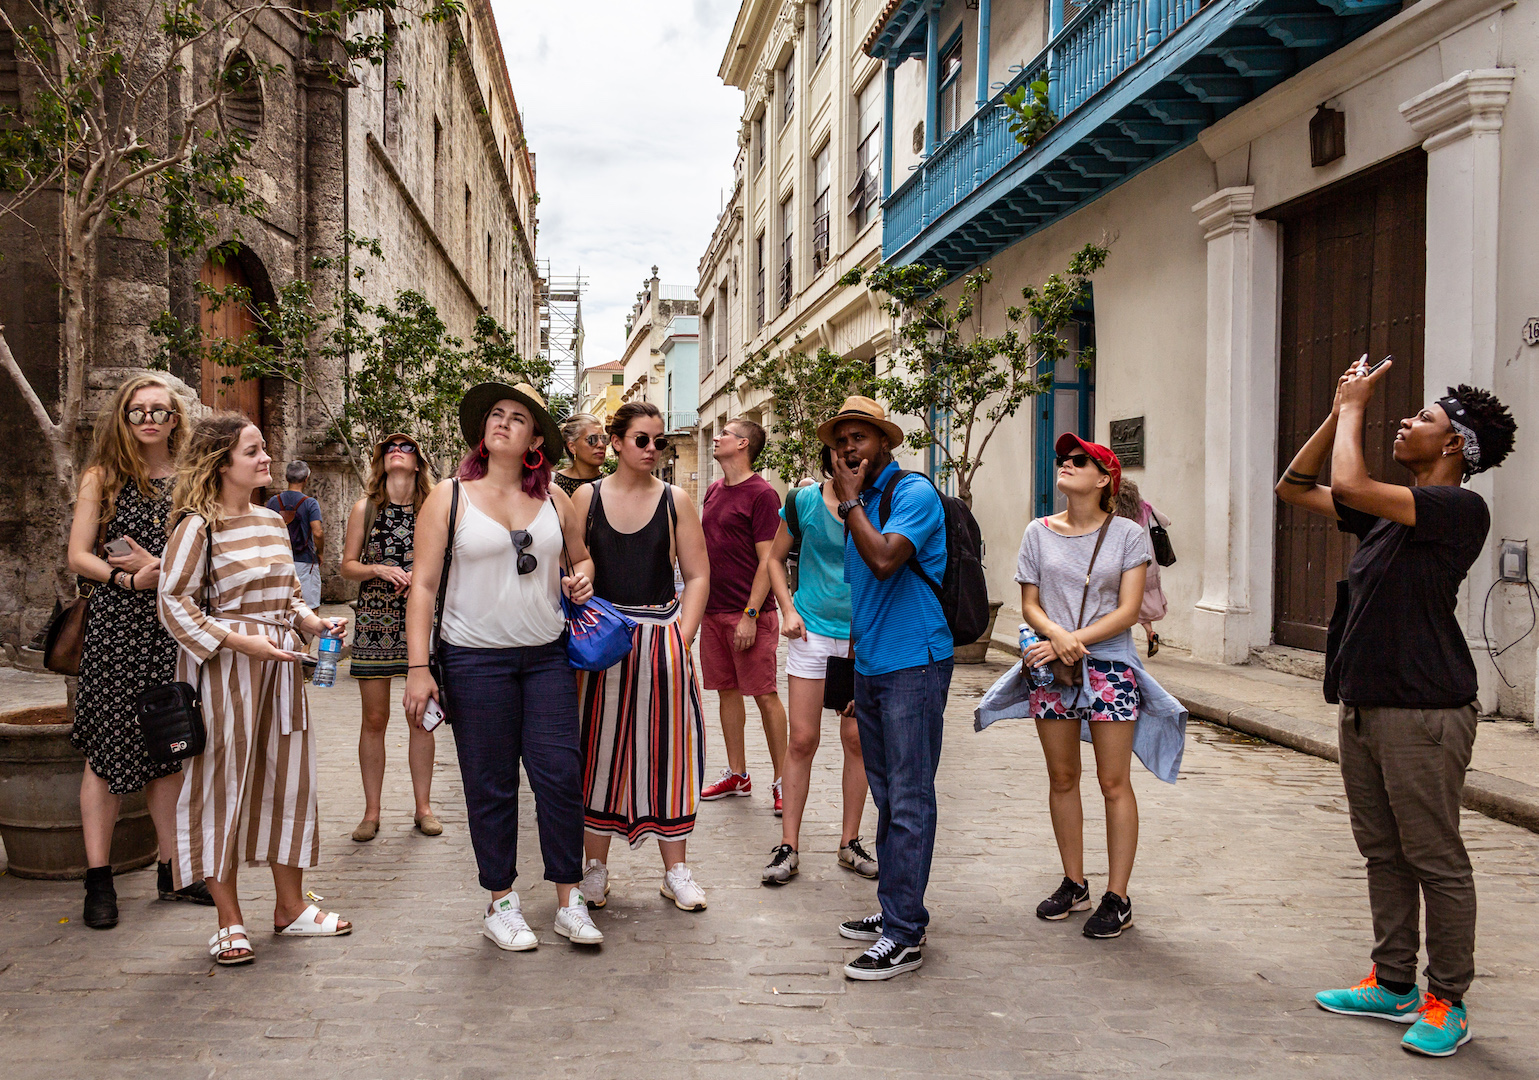 Students in street in Havana, Cuba looking at the historic buildings. 